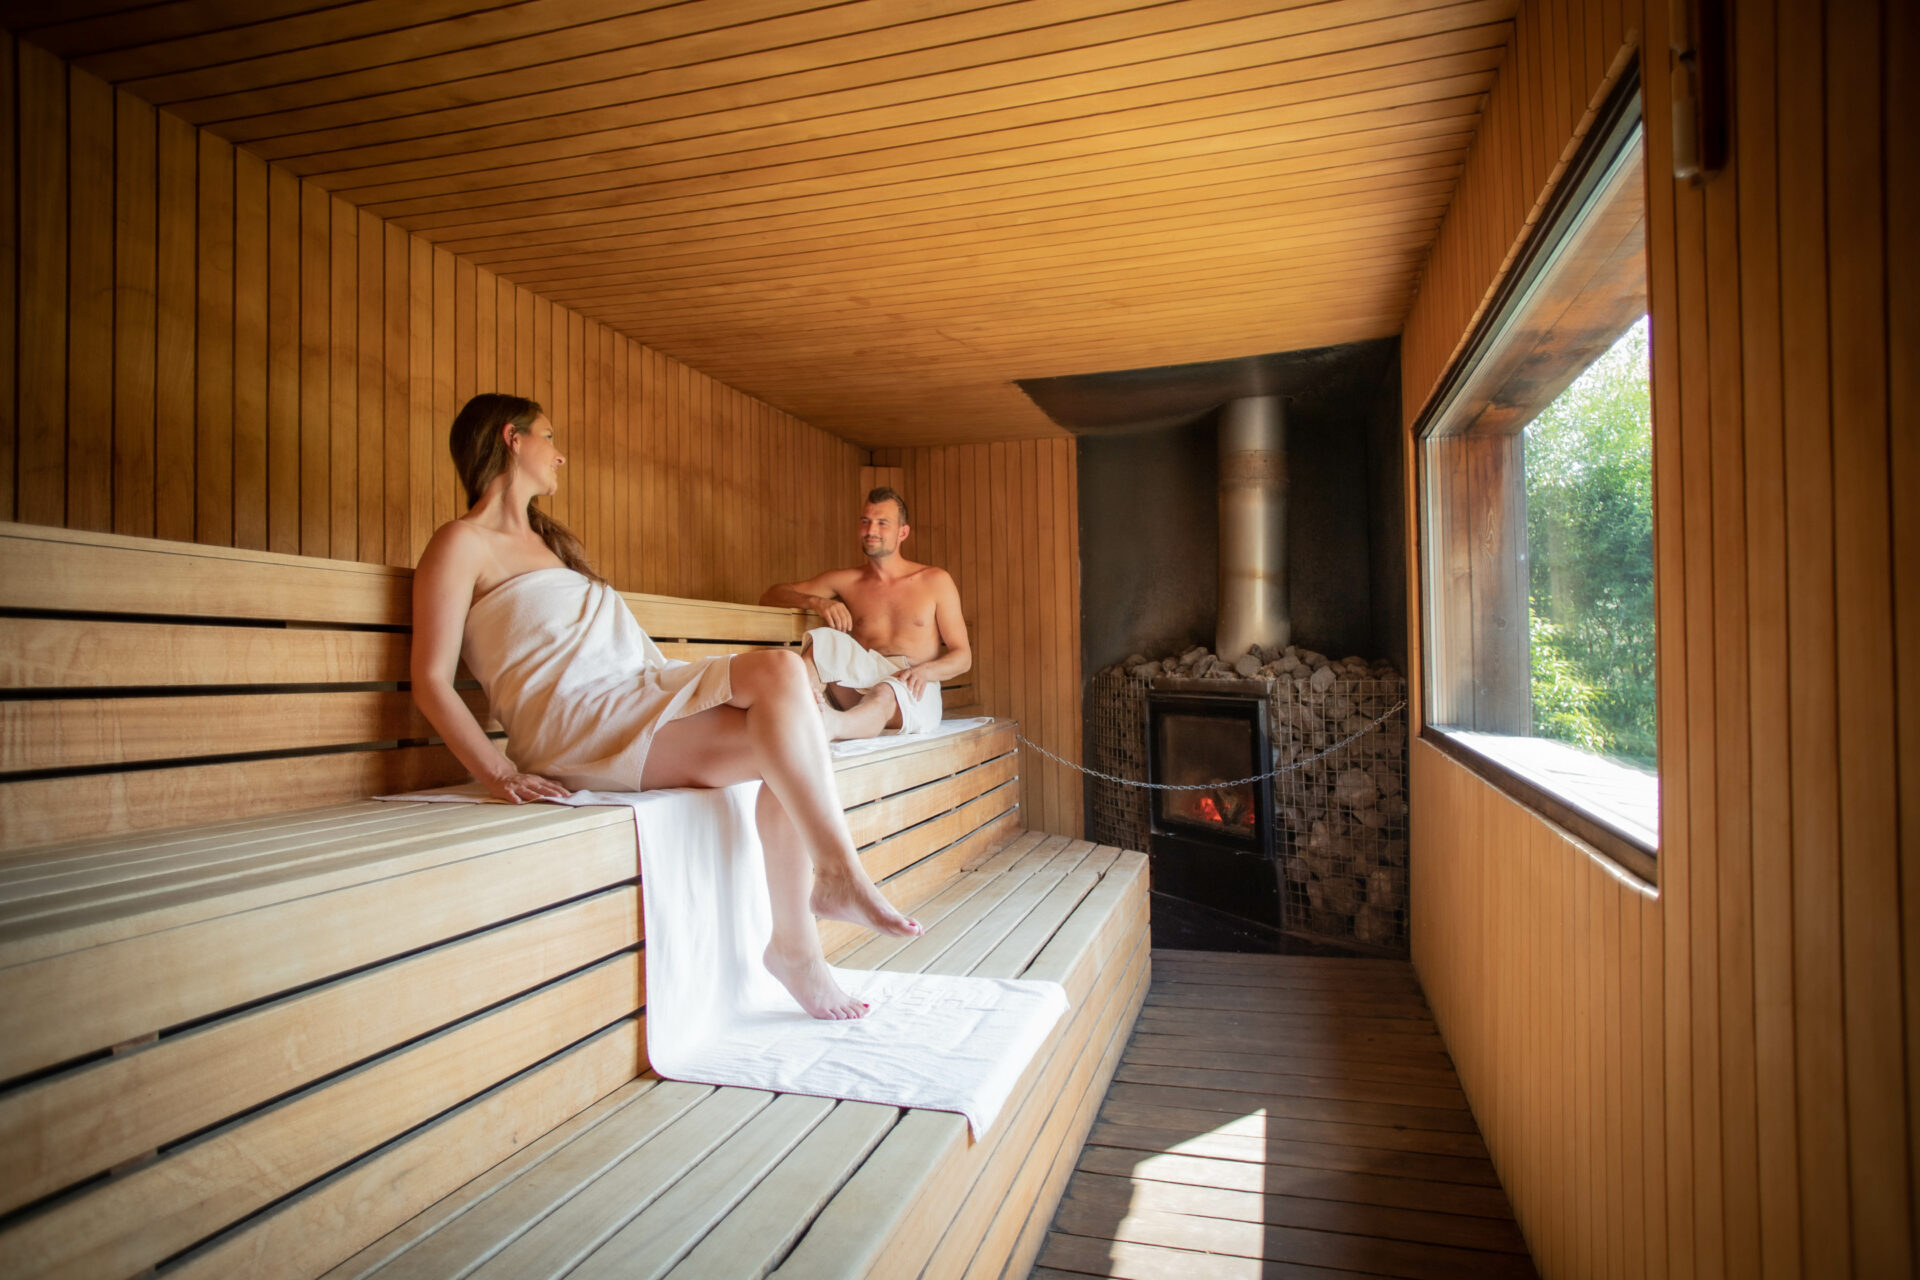 Promoted | Winter: our favourite sauna season